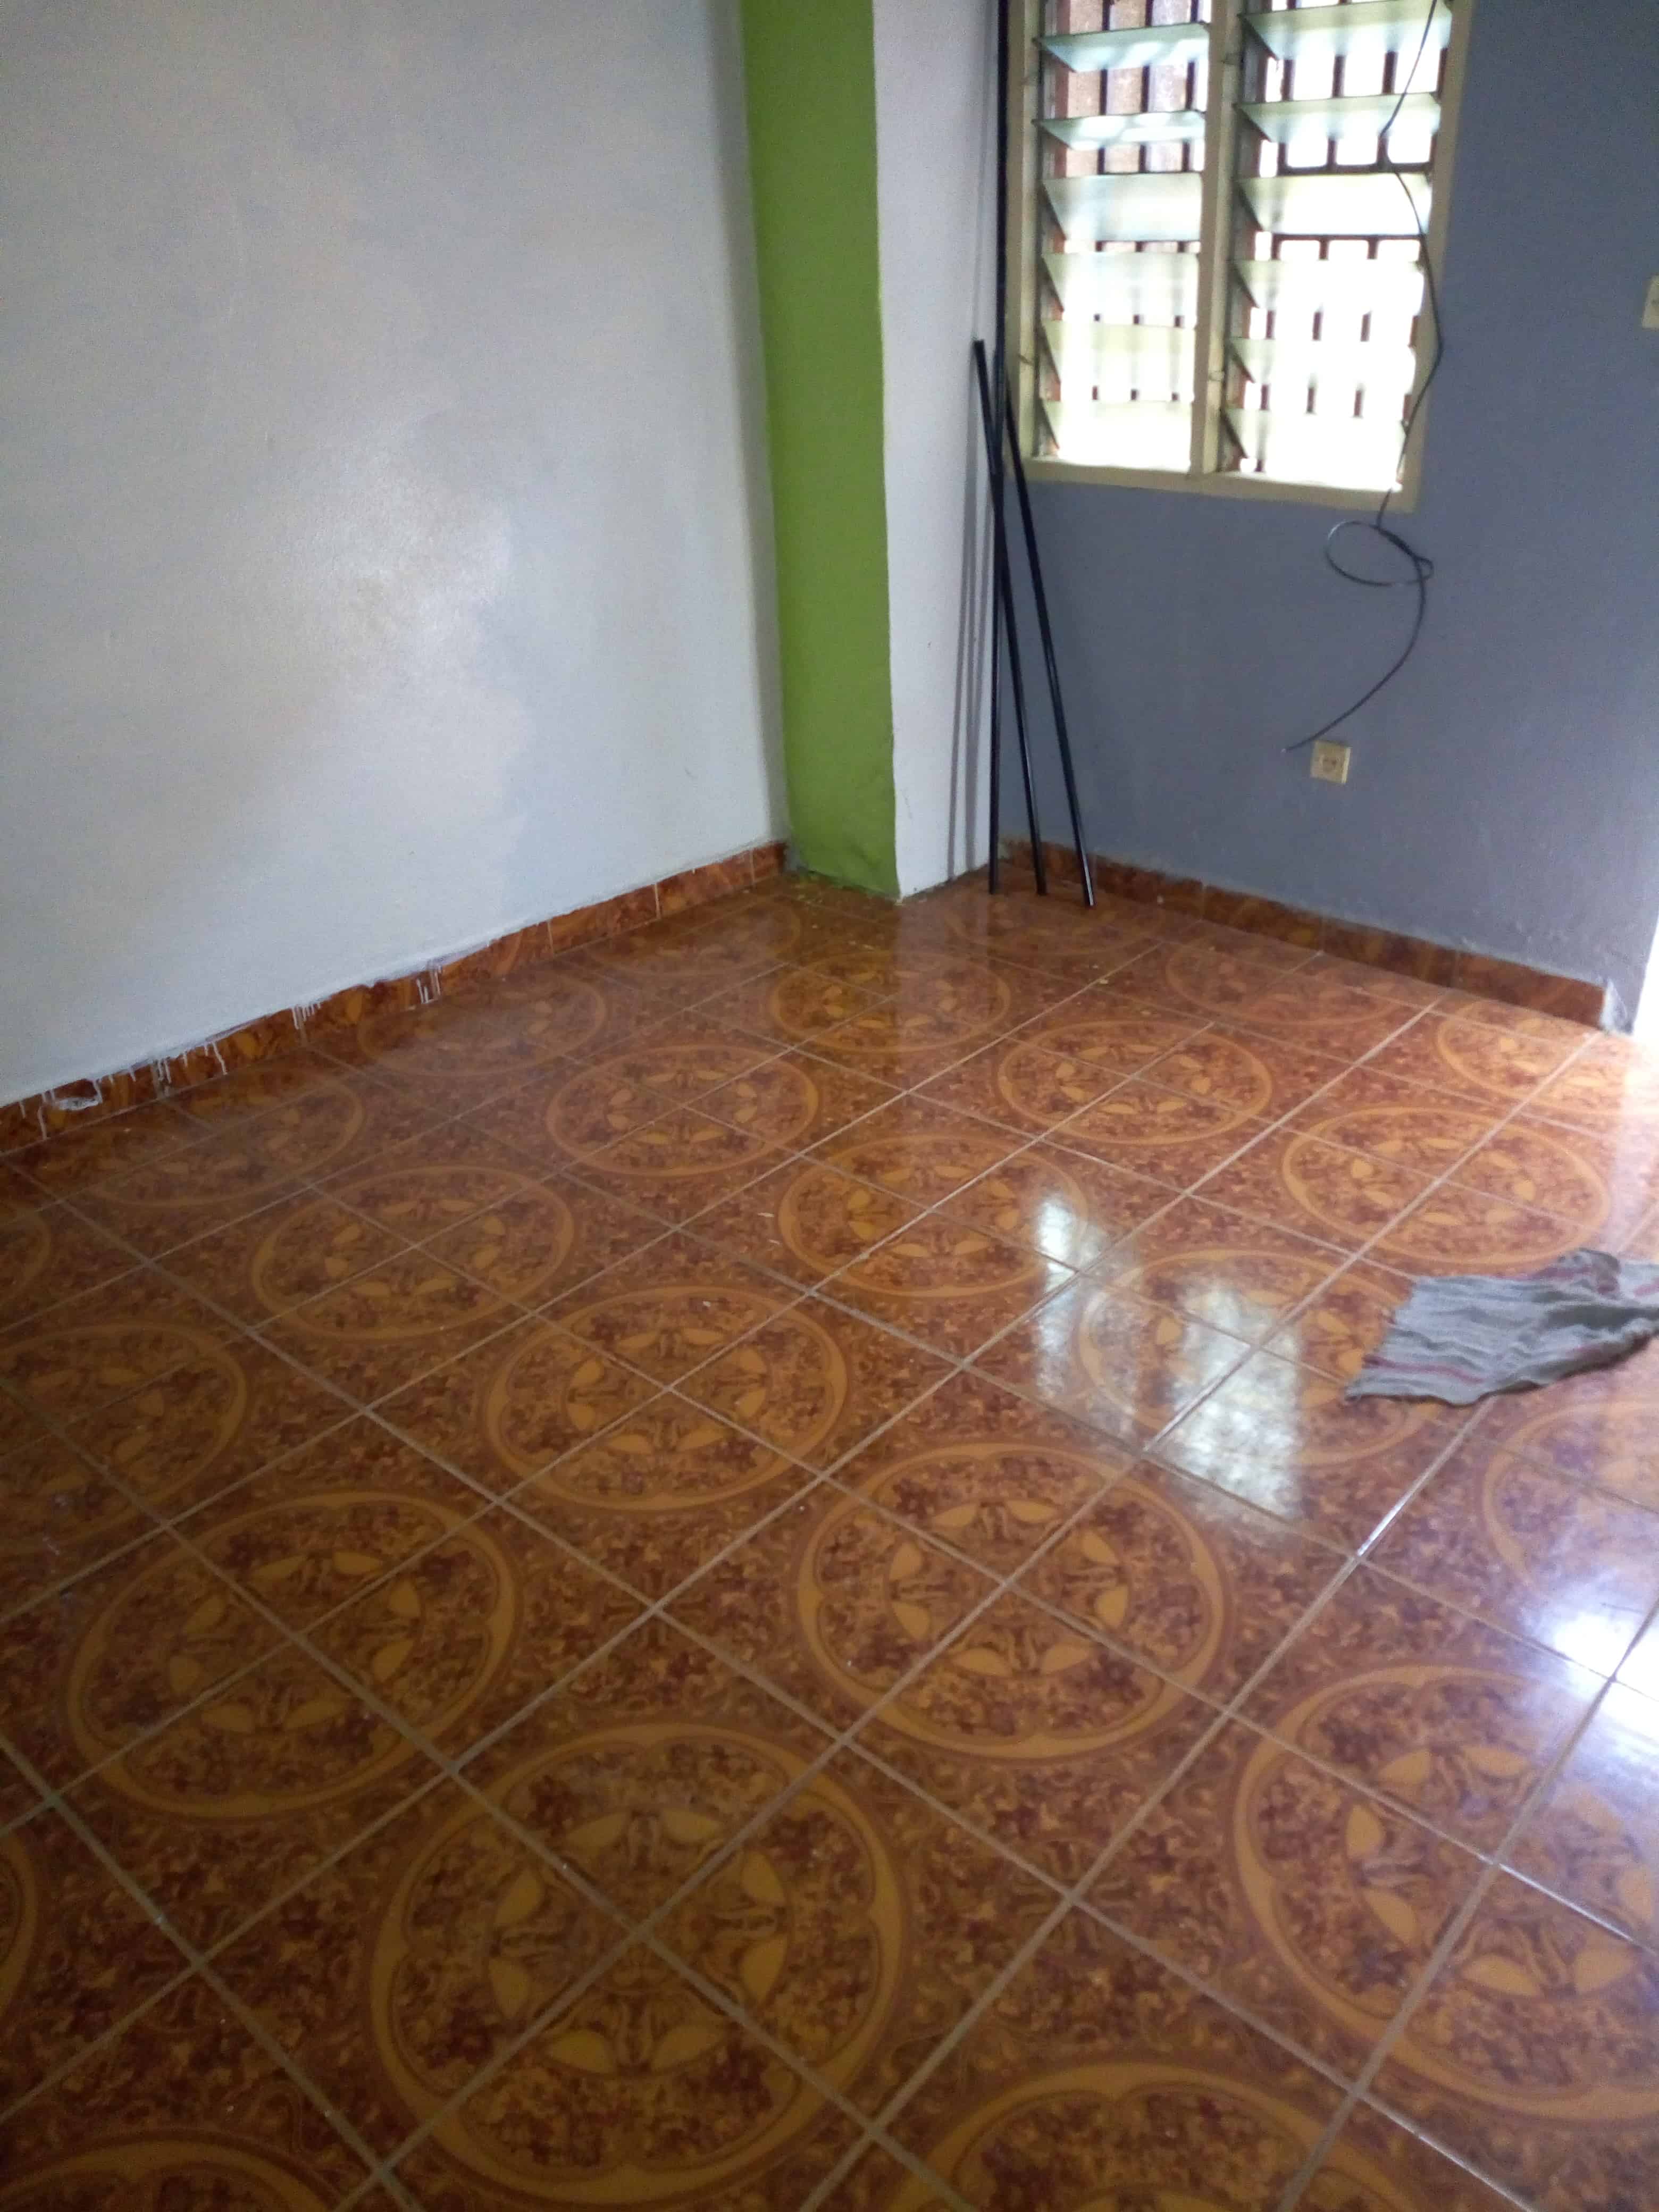 House (Wayside home) to rent - Yaoundé, Biyem-Assi, Studio moderne à louer à biyem assi - 1 living room(s), 2 bedroom(s), 1 bathroom(s) - 60 000 FCFA / month